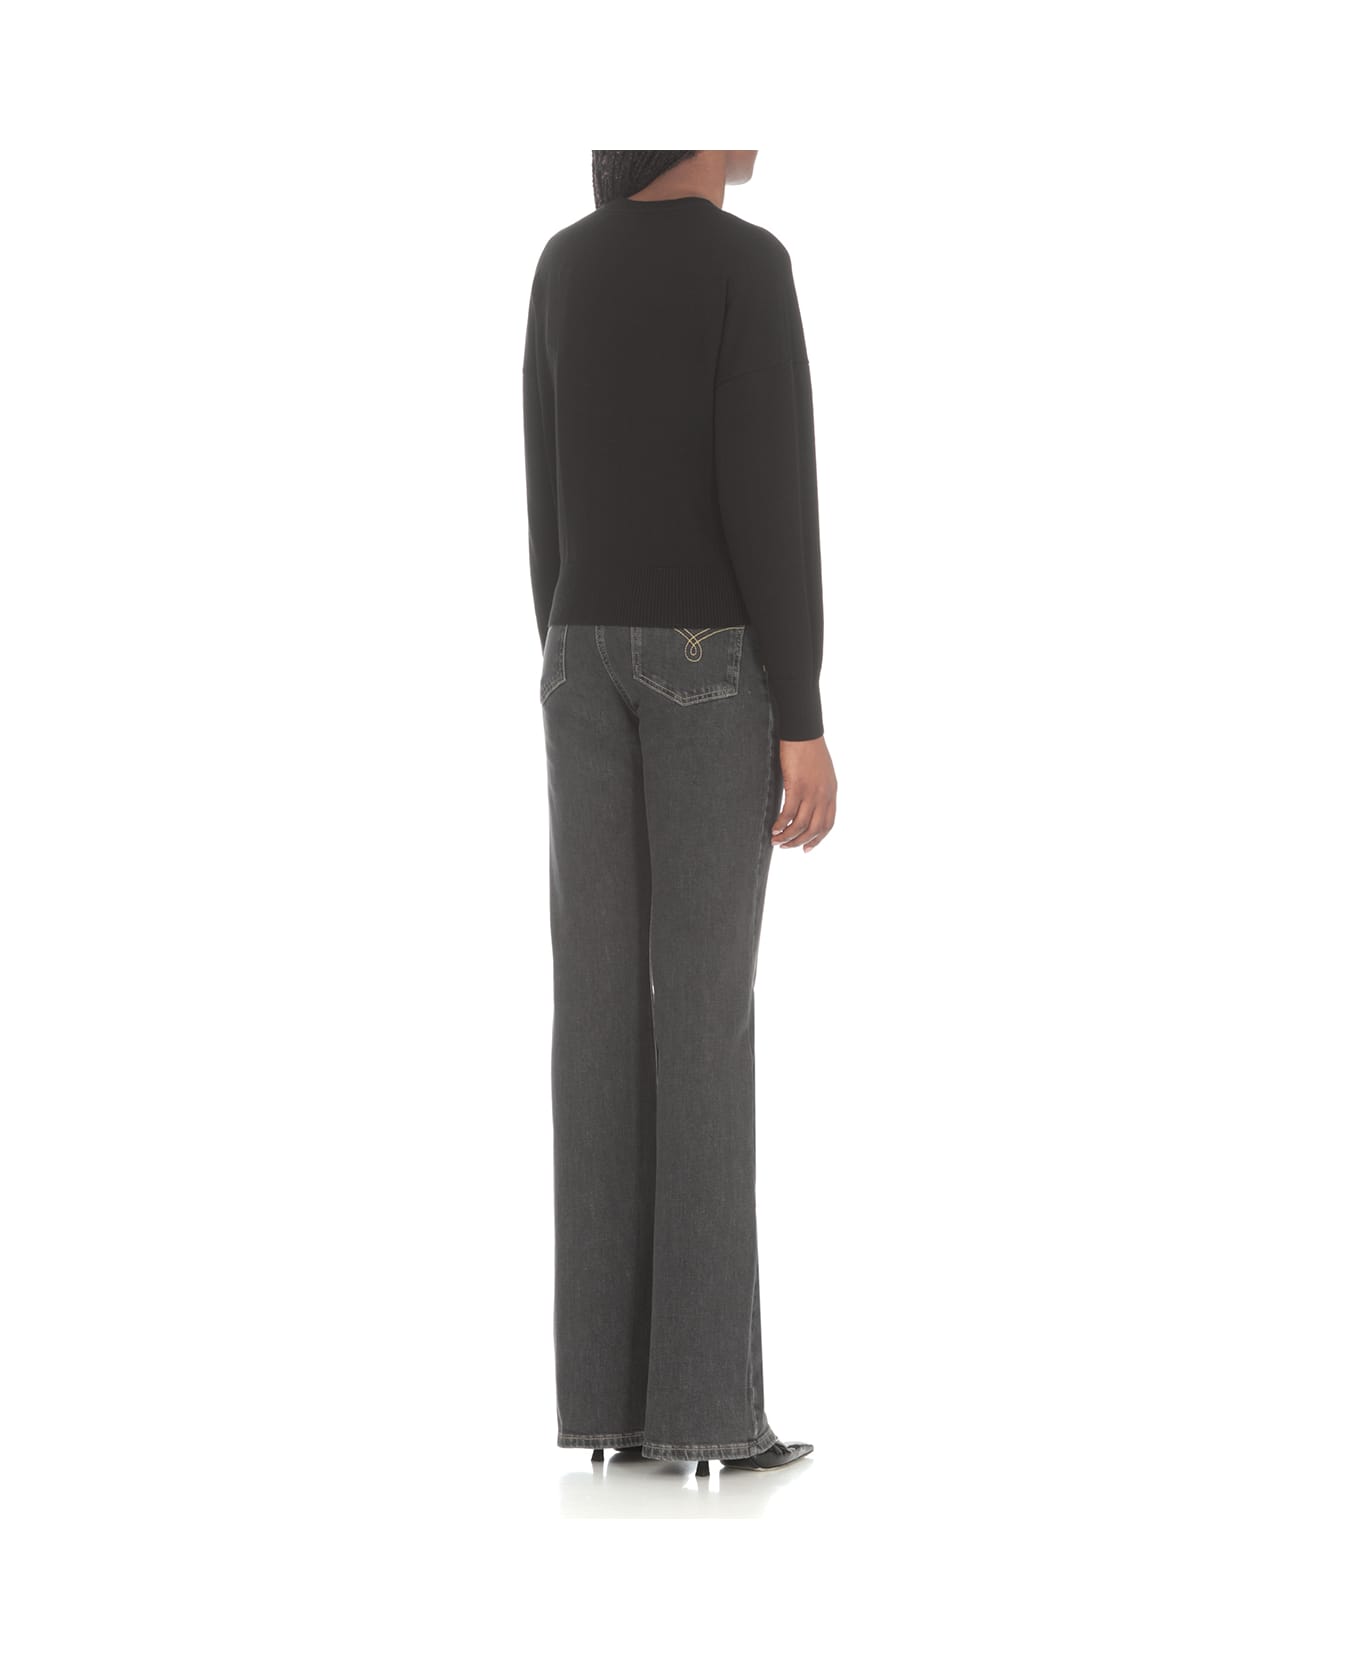 M05CH1N0 Jeans Cotton Sweater - Black